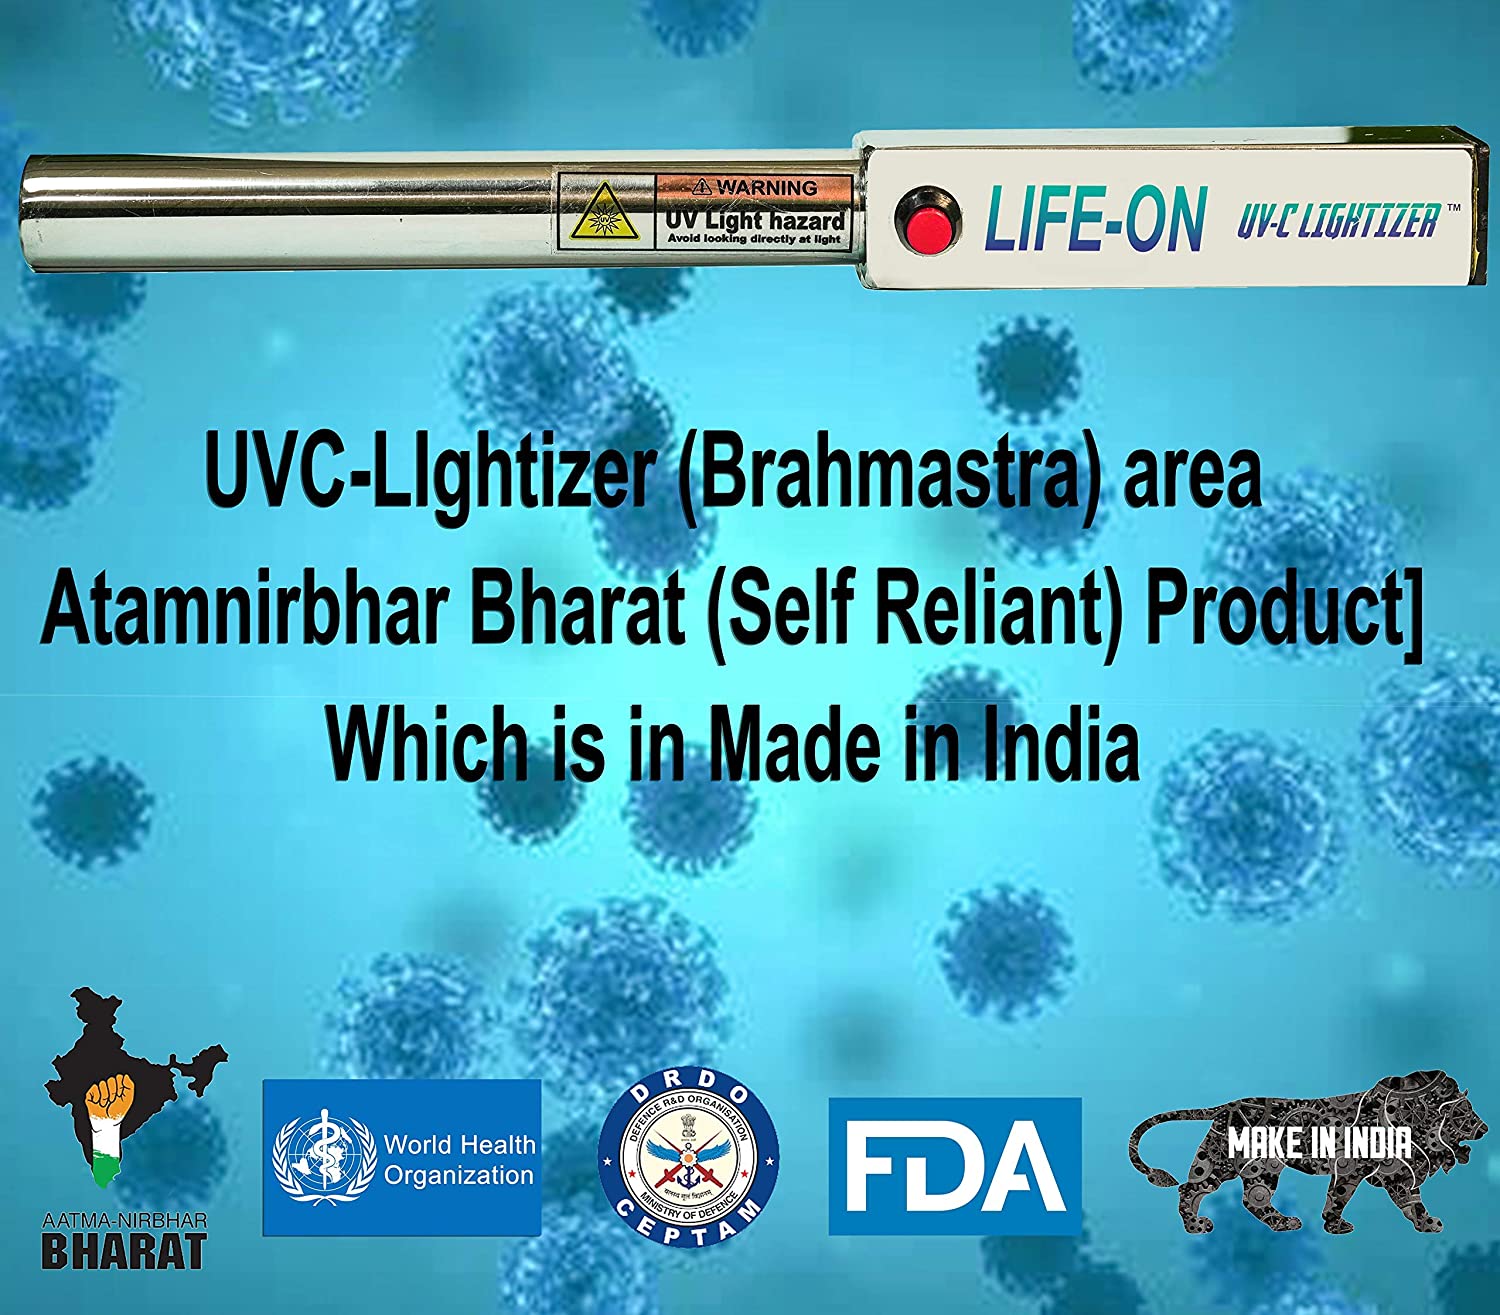 Chemical Free UV-C Light Based Sanitizer